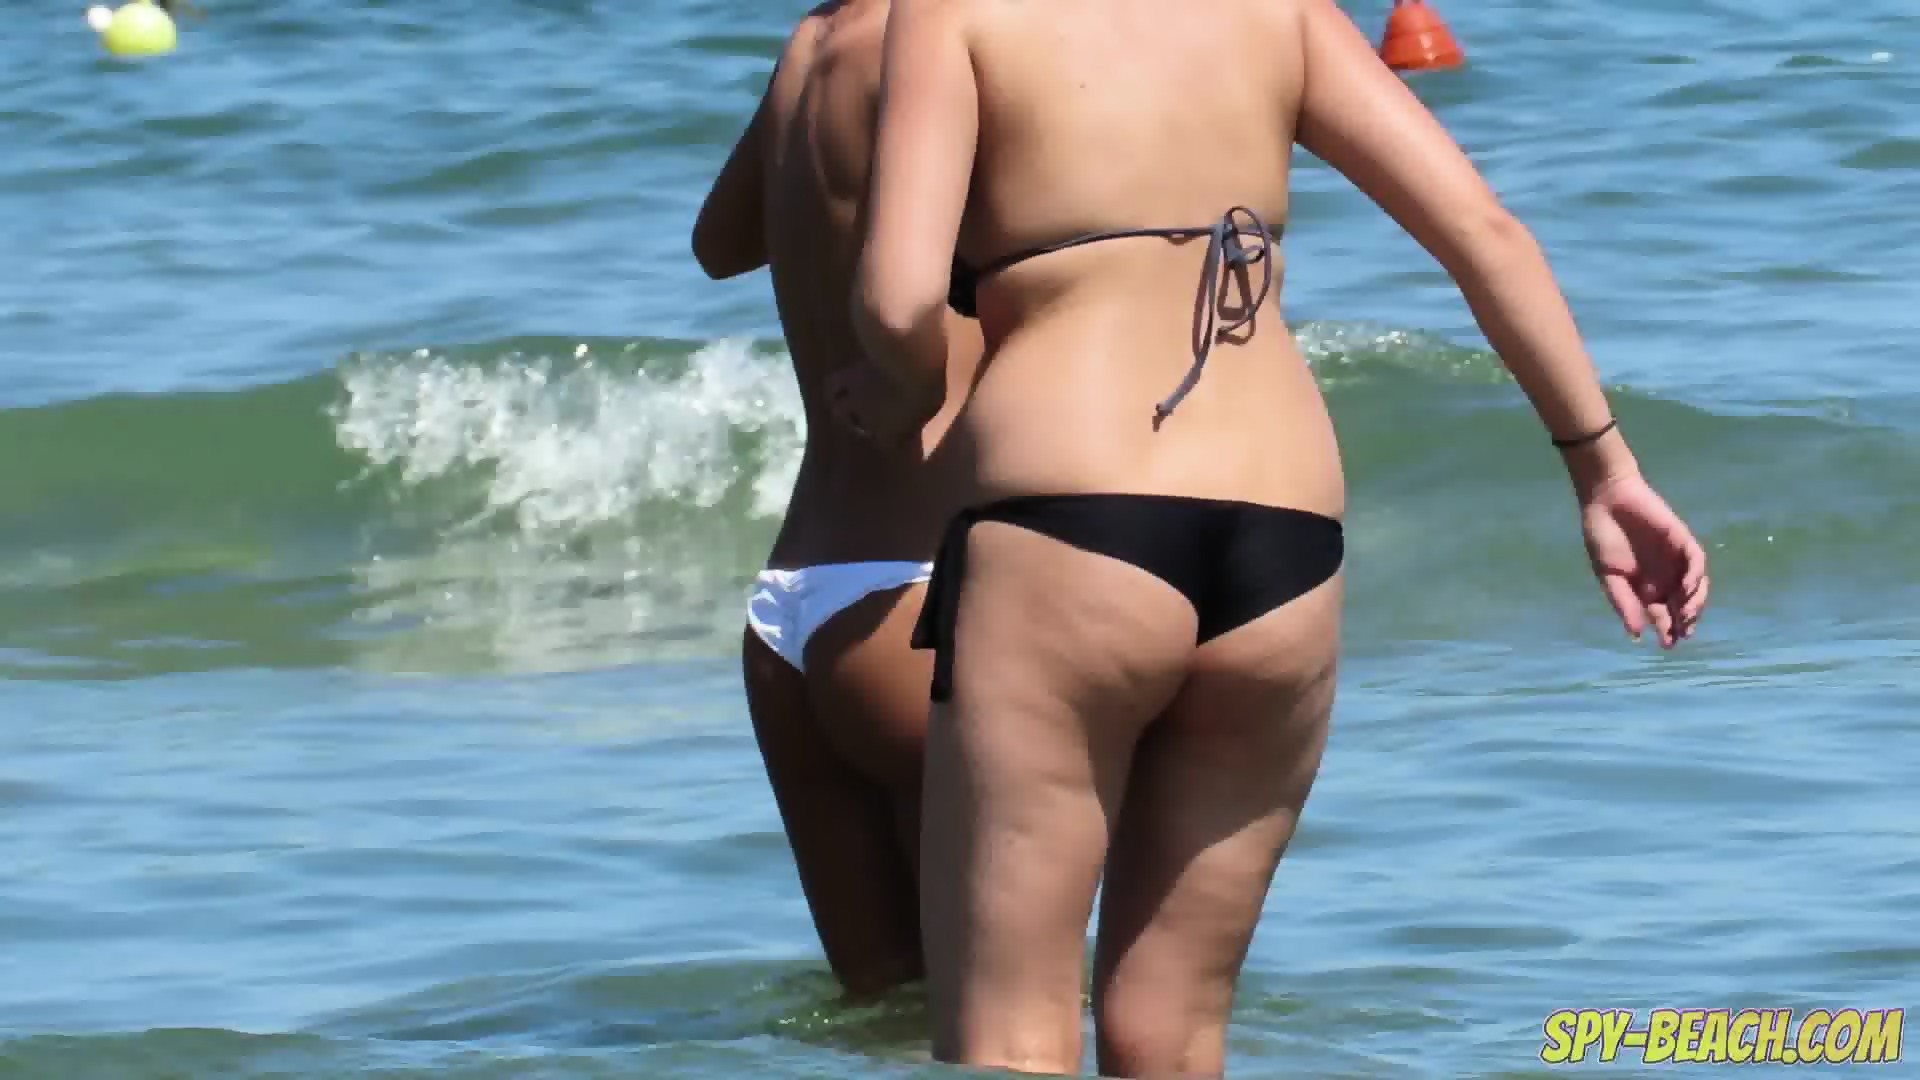 Hot Amateurs Topless Voyeur Beach Sexy Big Tits Babes